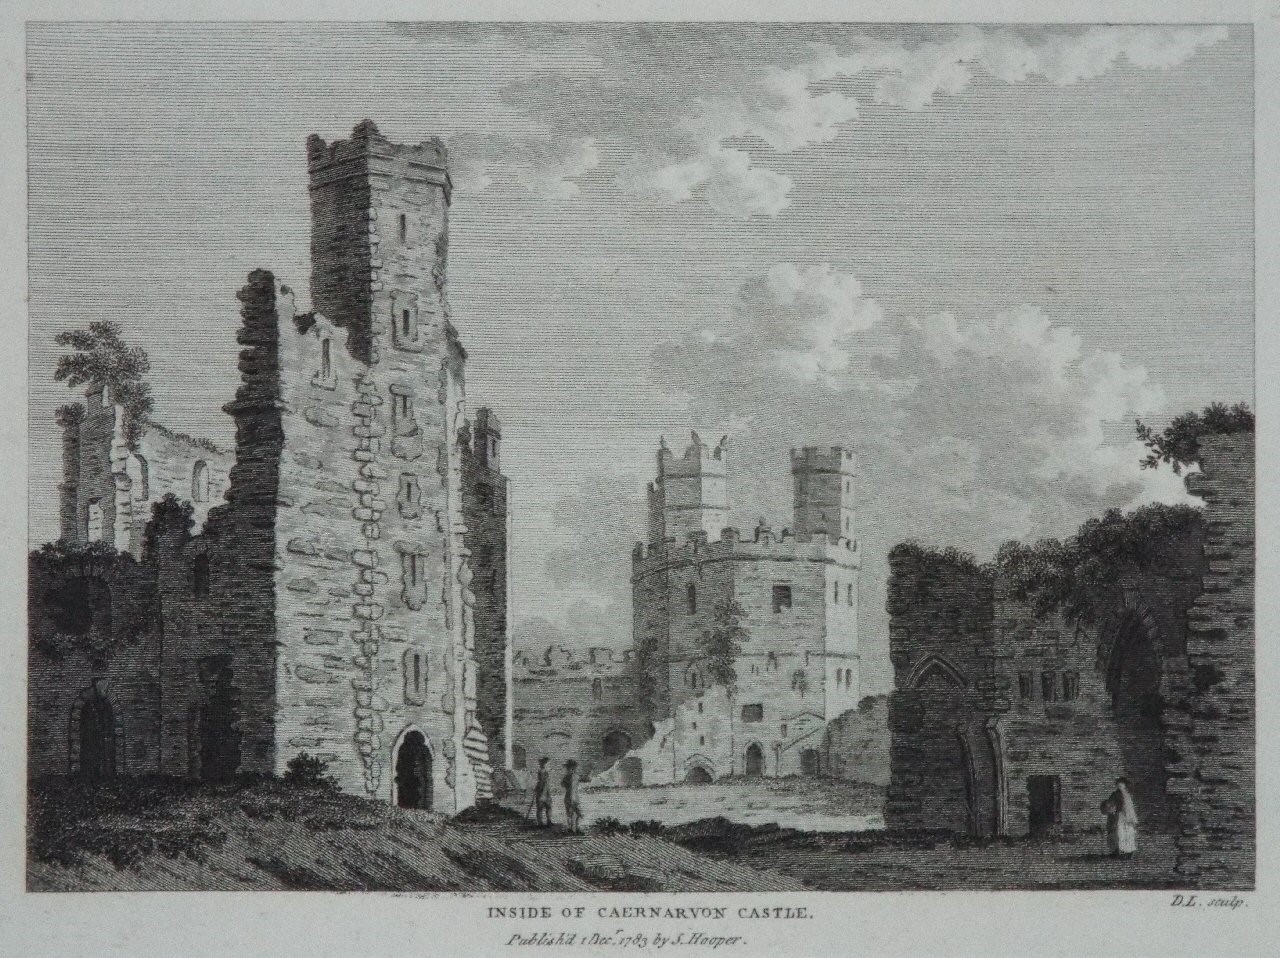 Print - Inside of Caernarvon Castle. - D